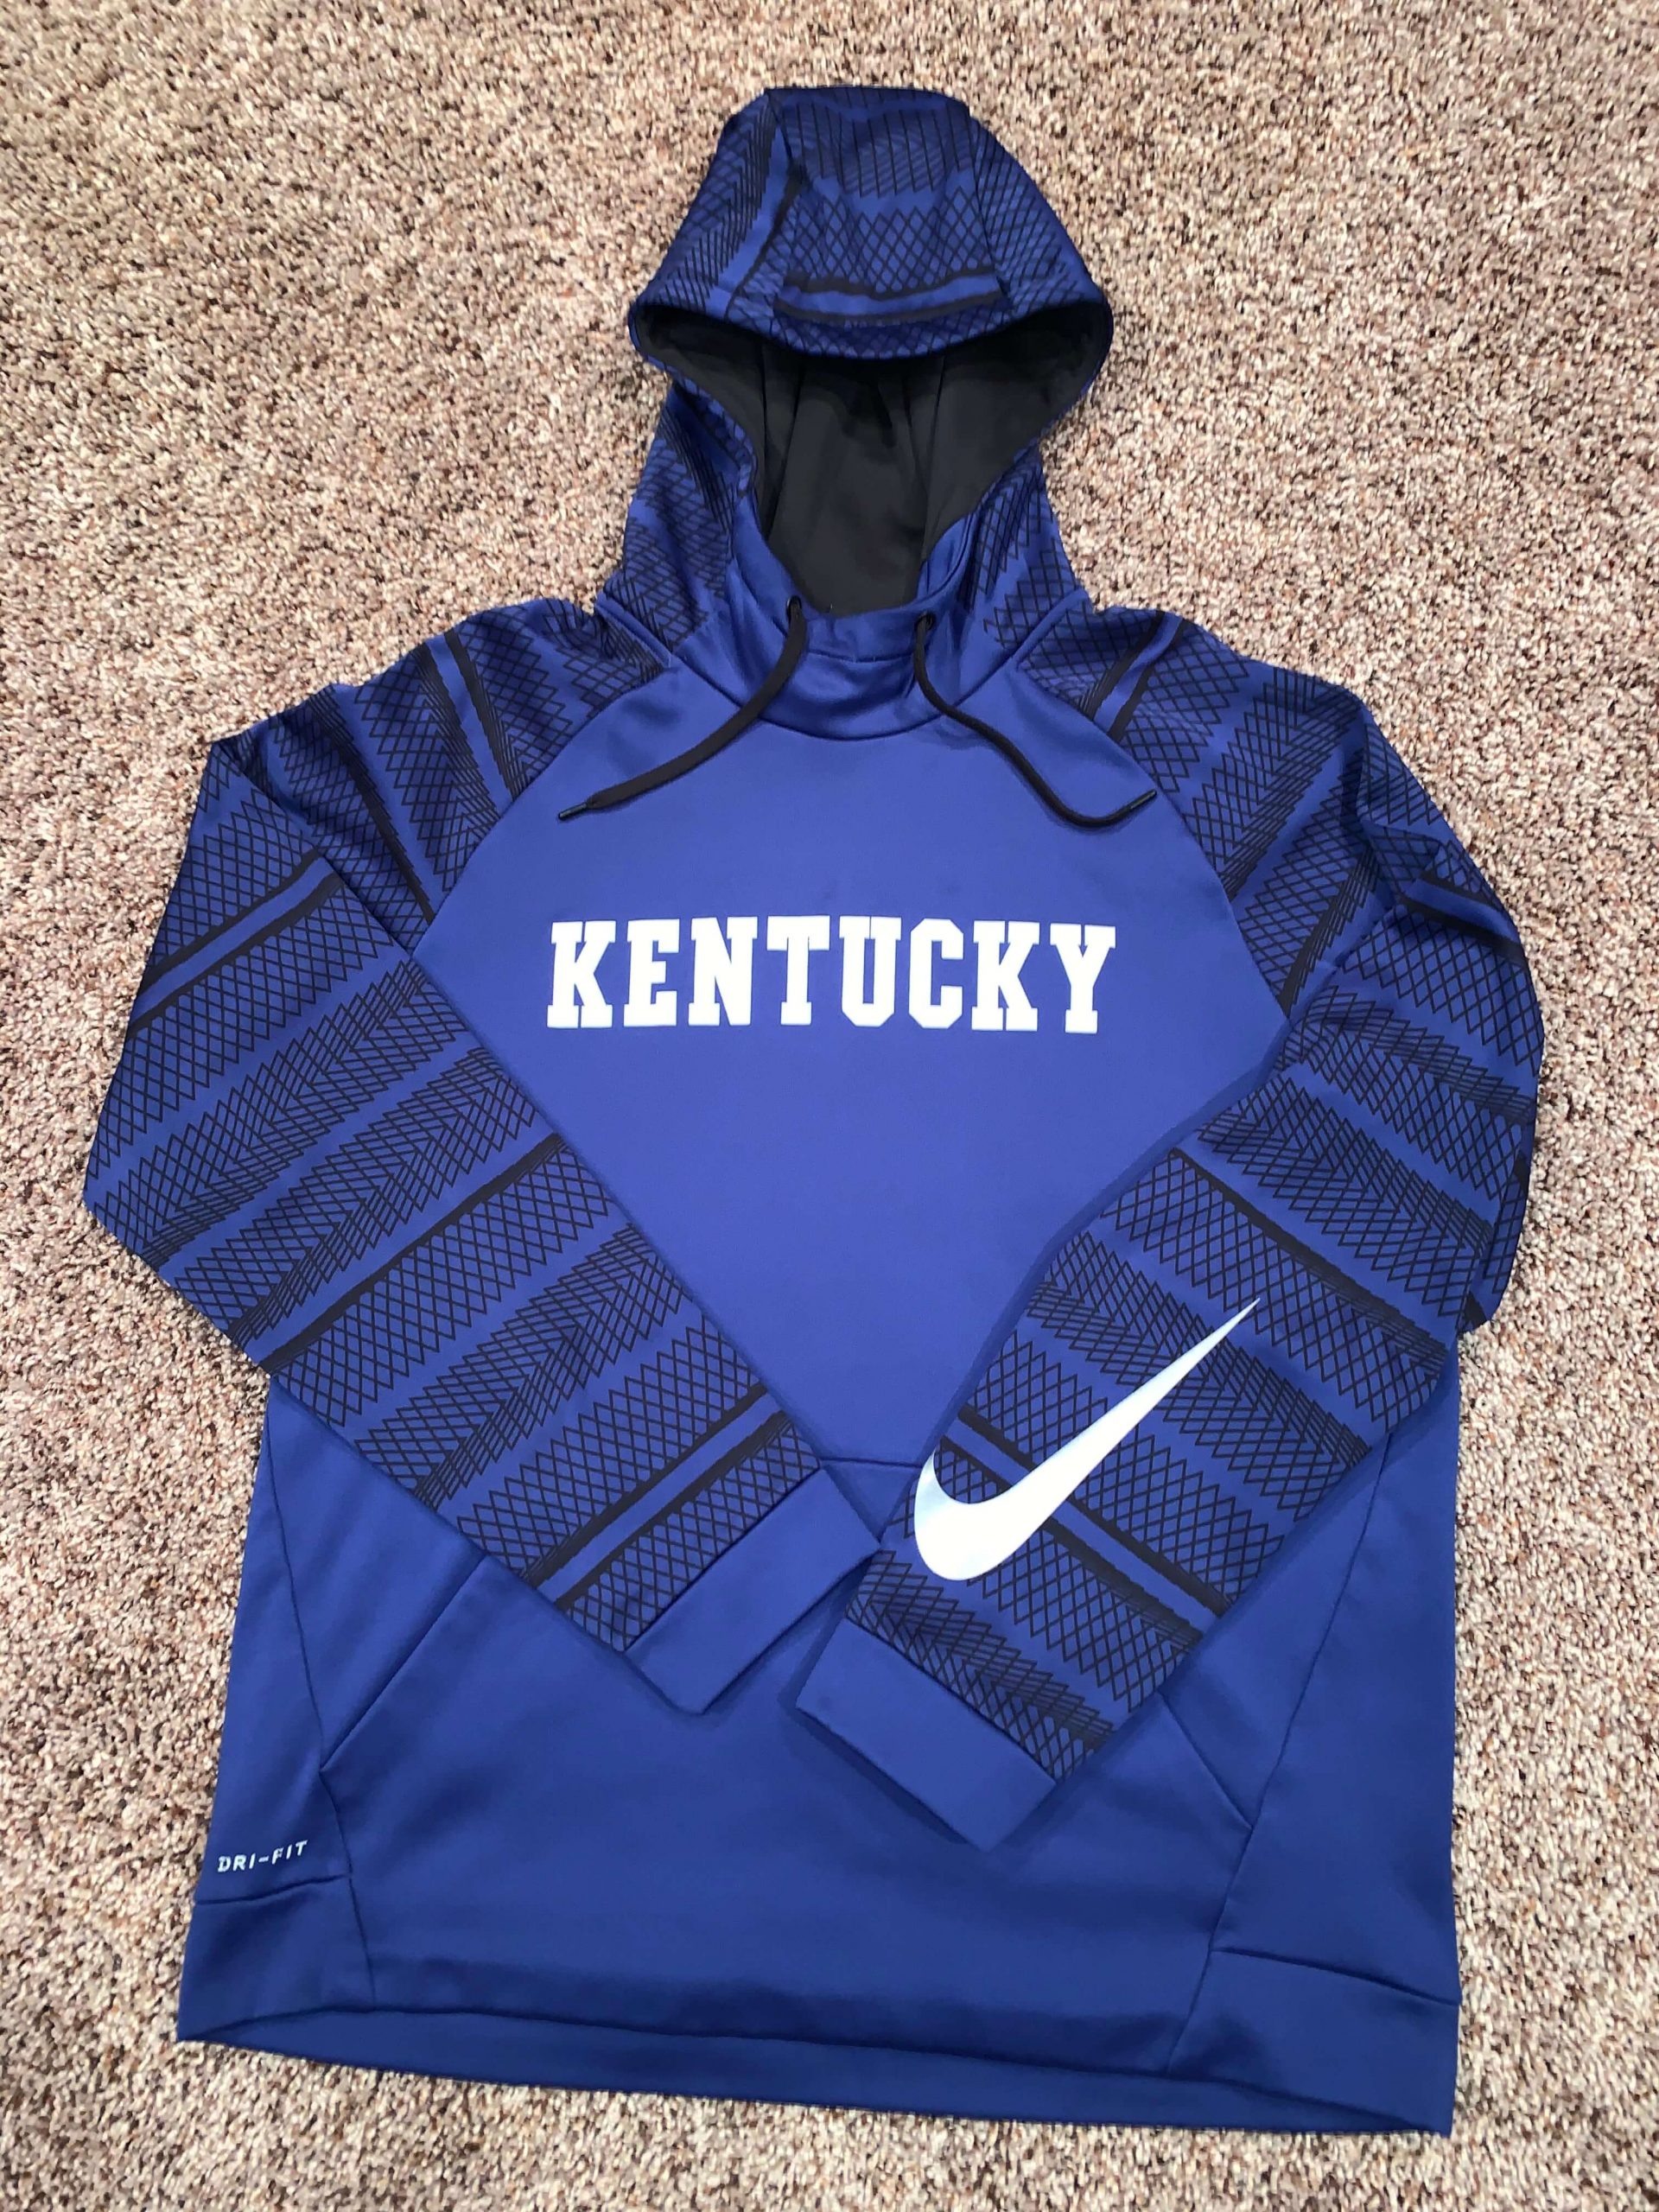 Kentucky Nike Dri-Fit Hoodie : NARP Clothing